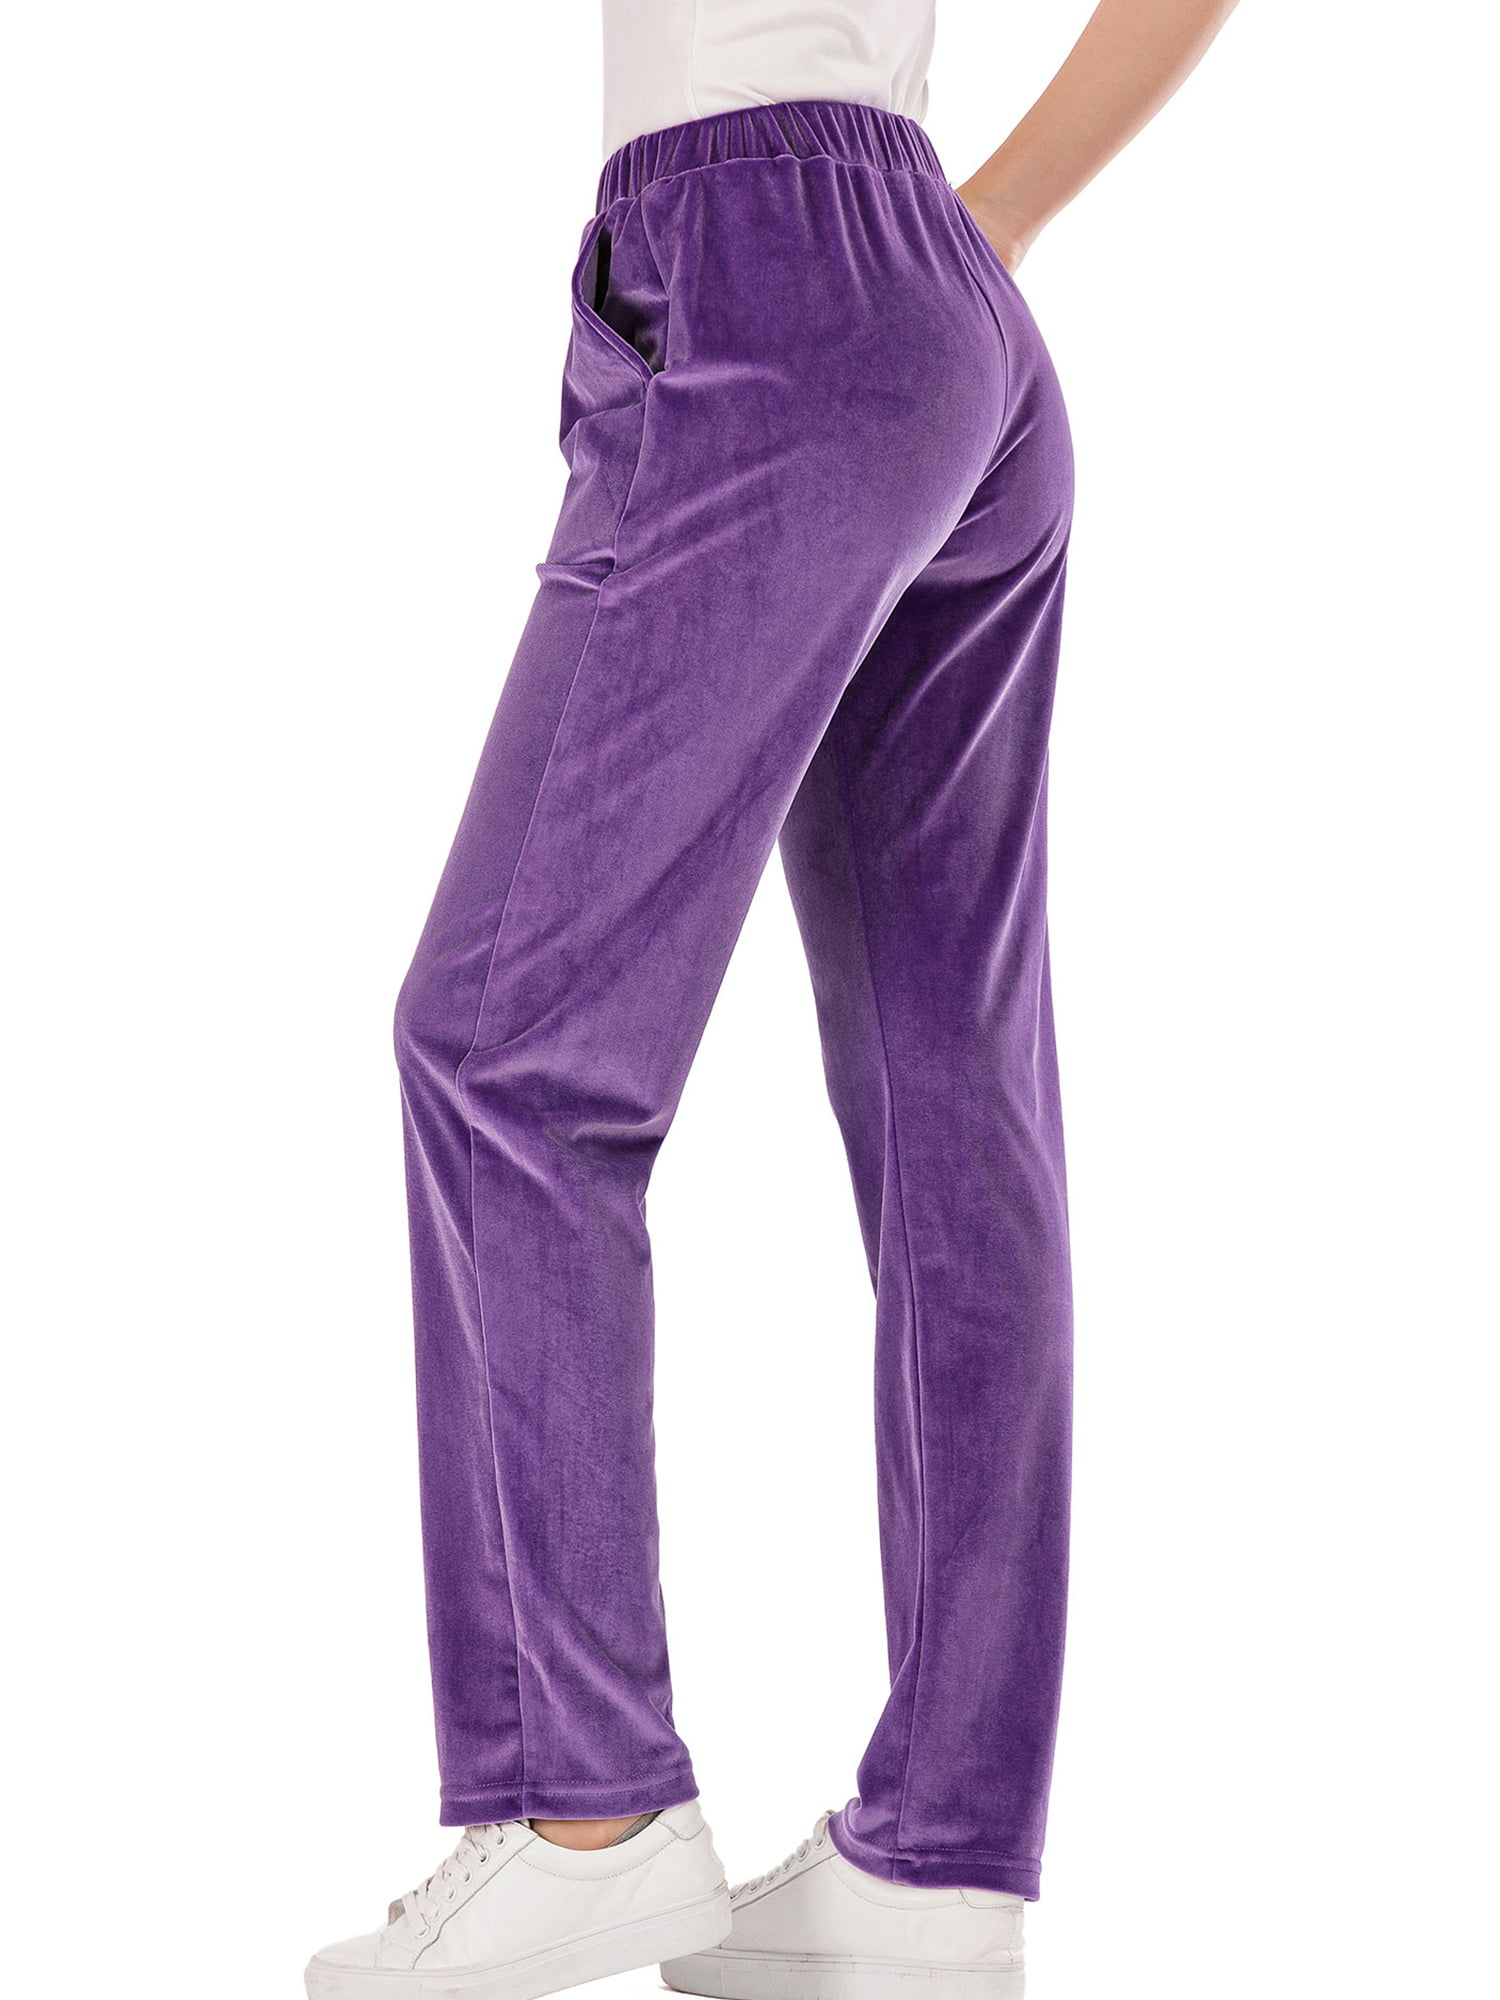 BAG WIZARD - Women's Winter Velvet Tracksuit Pants Lined Sweatpants ...